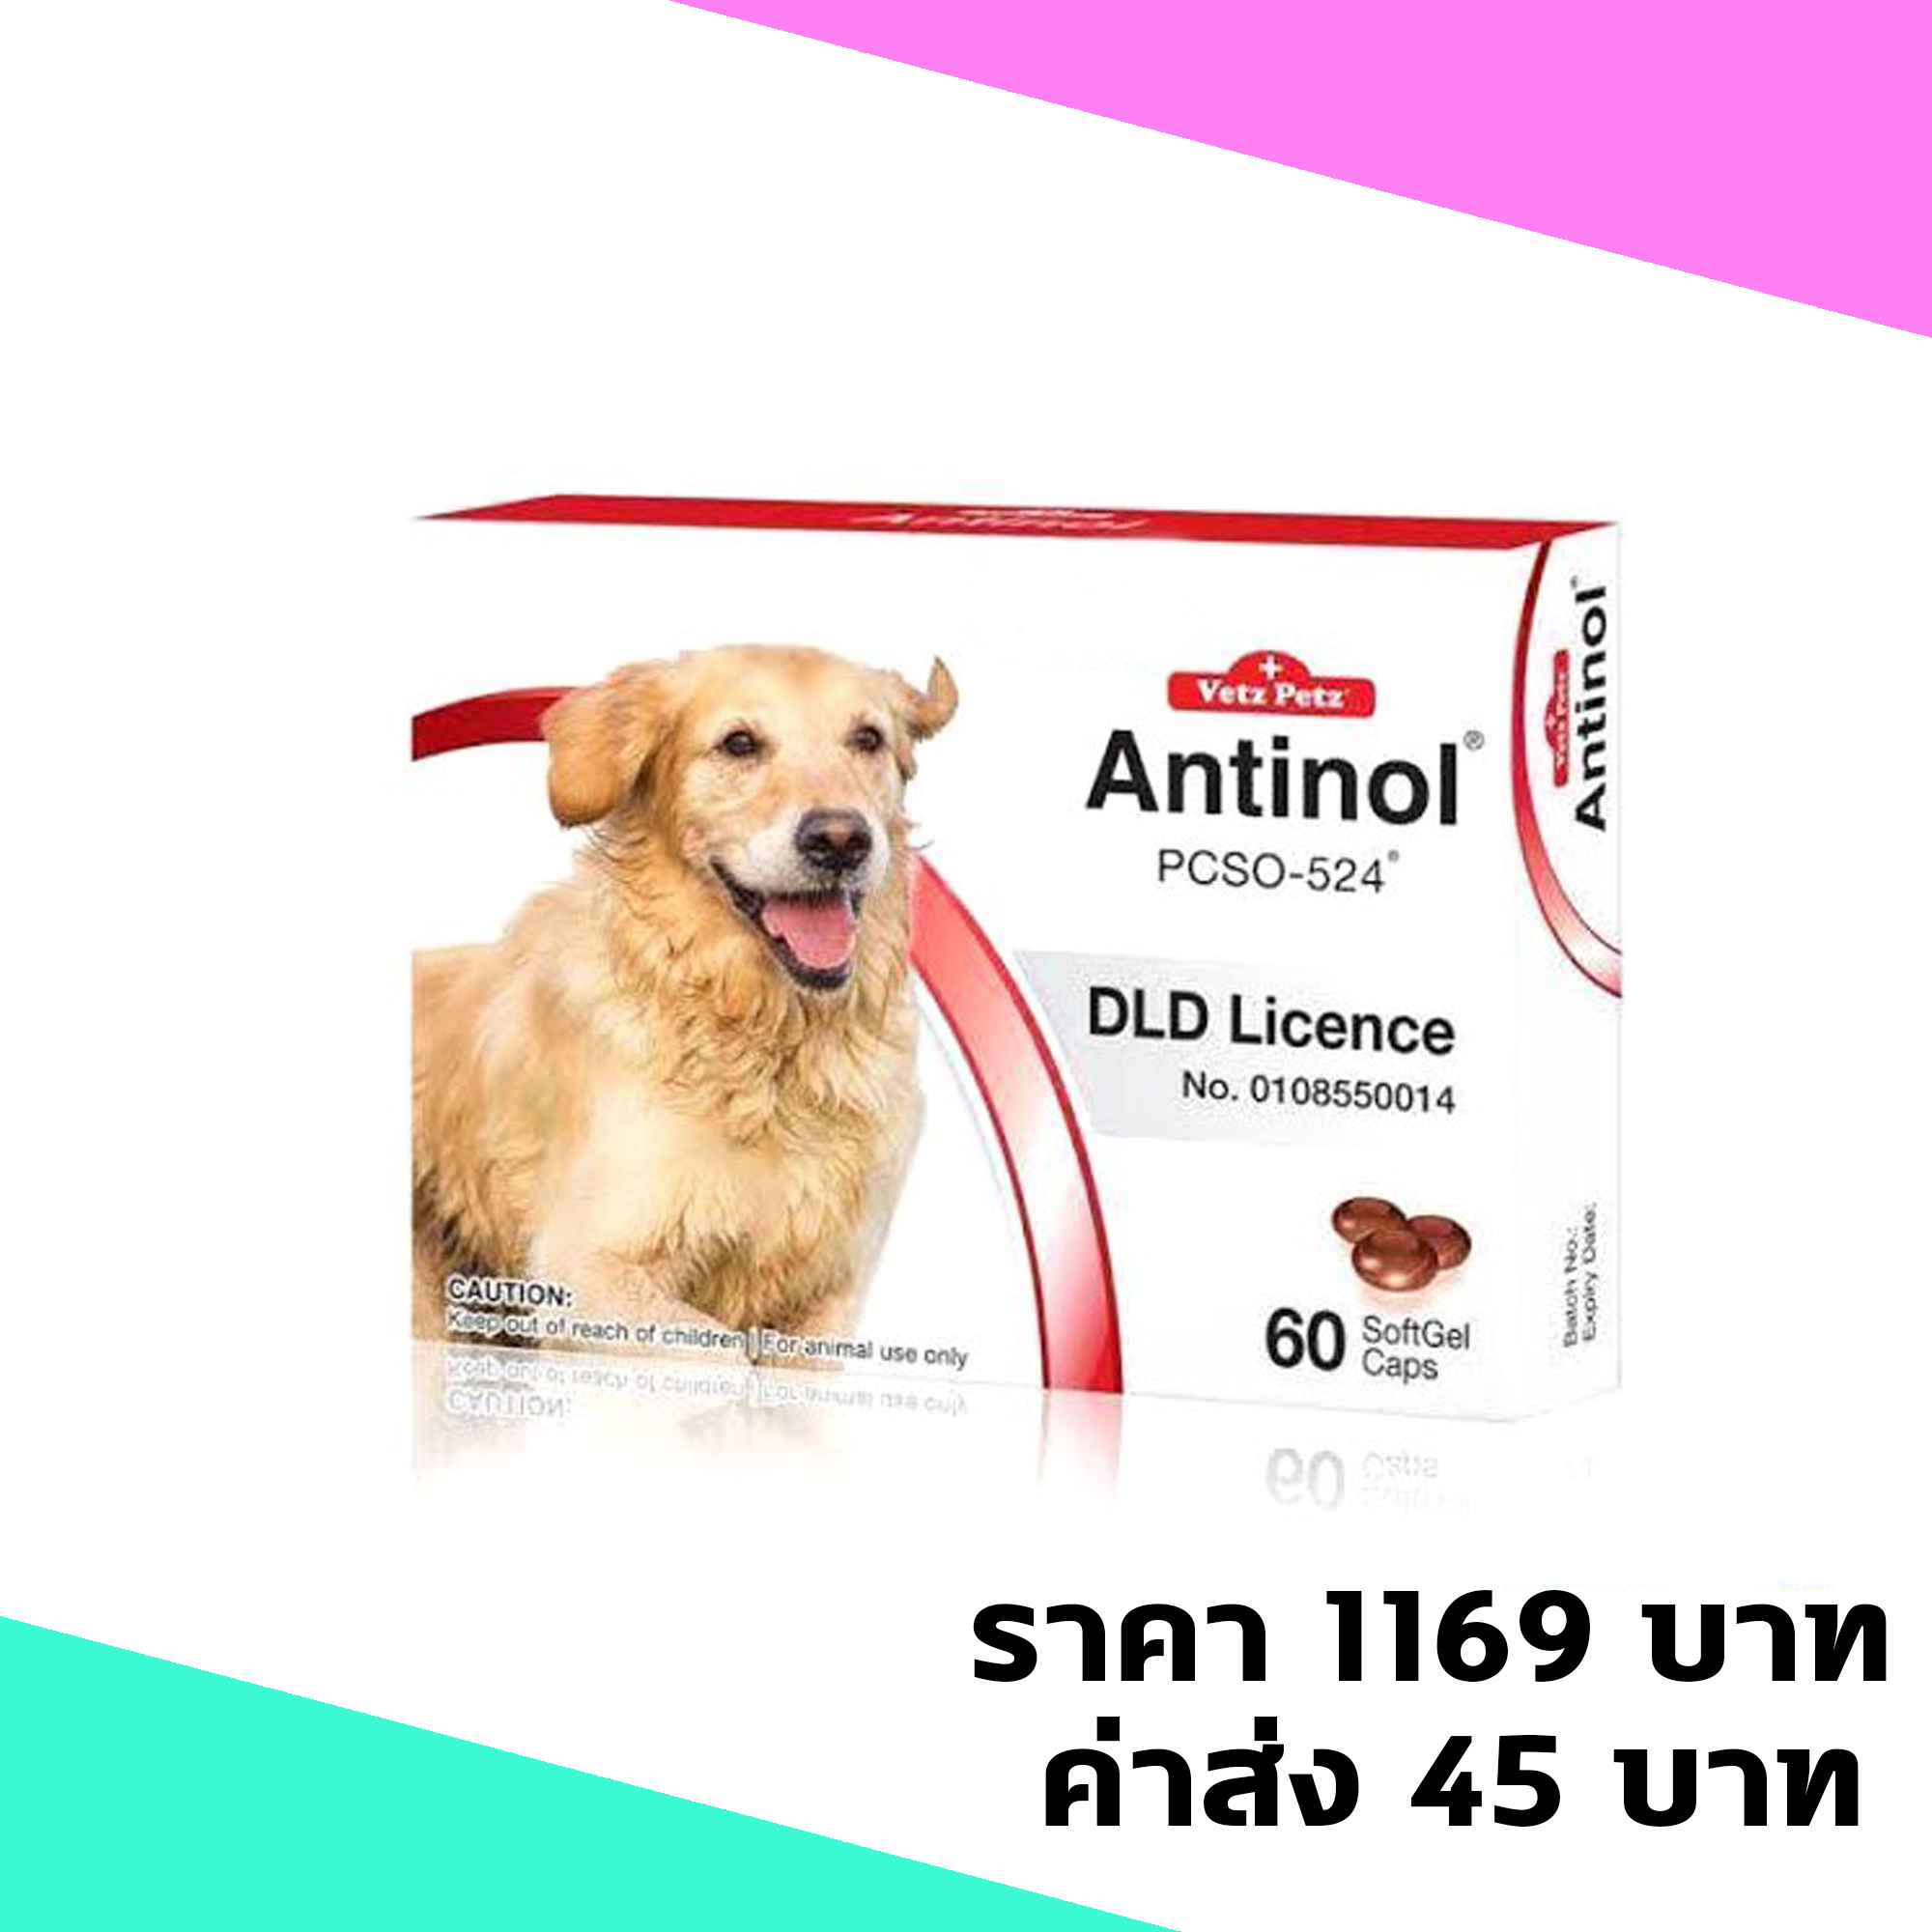 Vetz Petz Antinol Dog อาหารเสริมบำรุงข้อสำหรับสุนัข บรรจุ 60 เม็ด จำนวน 1 กล่อง